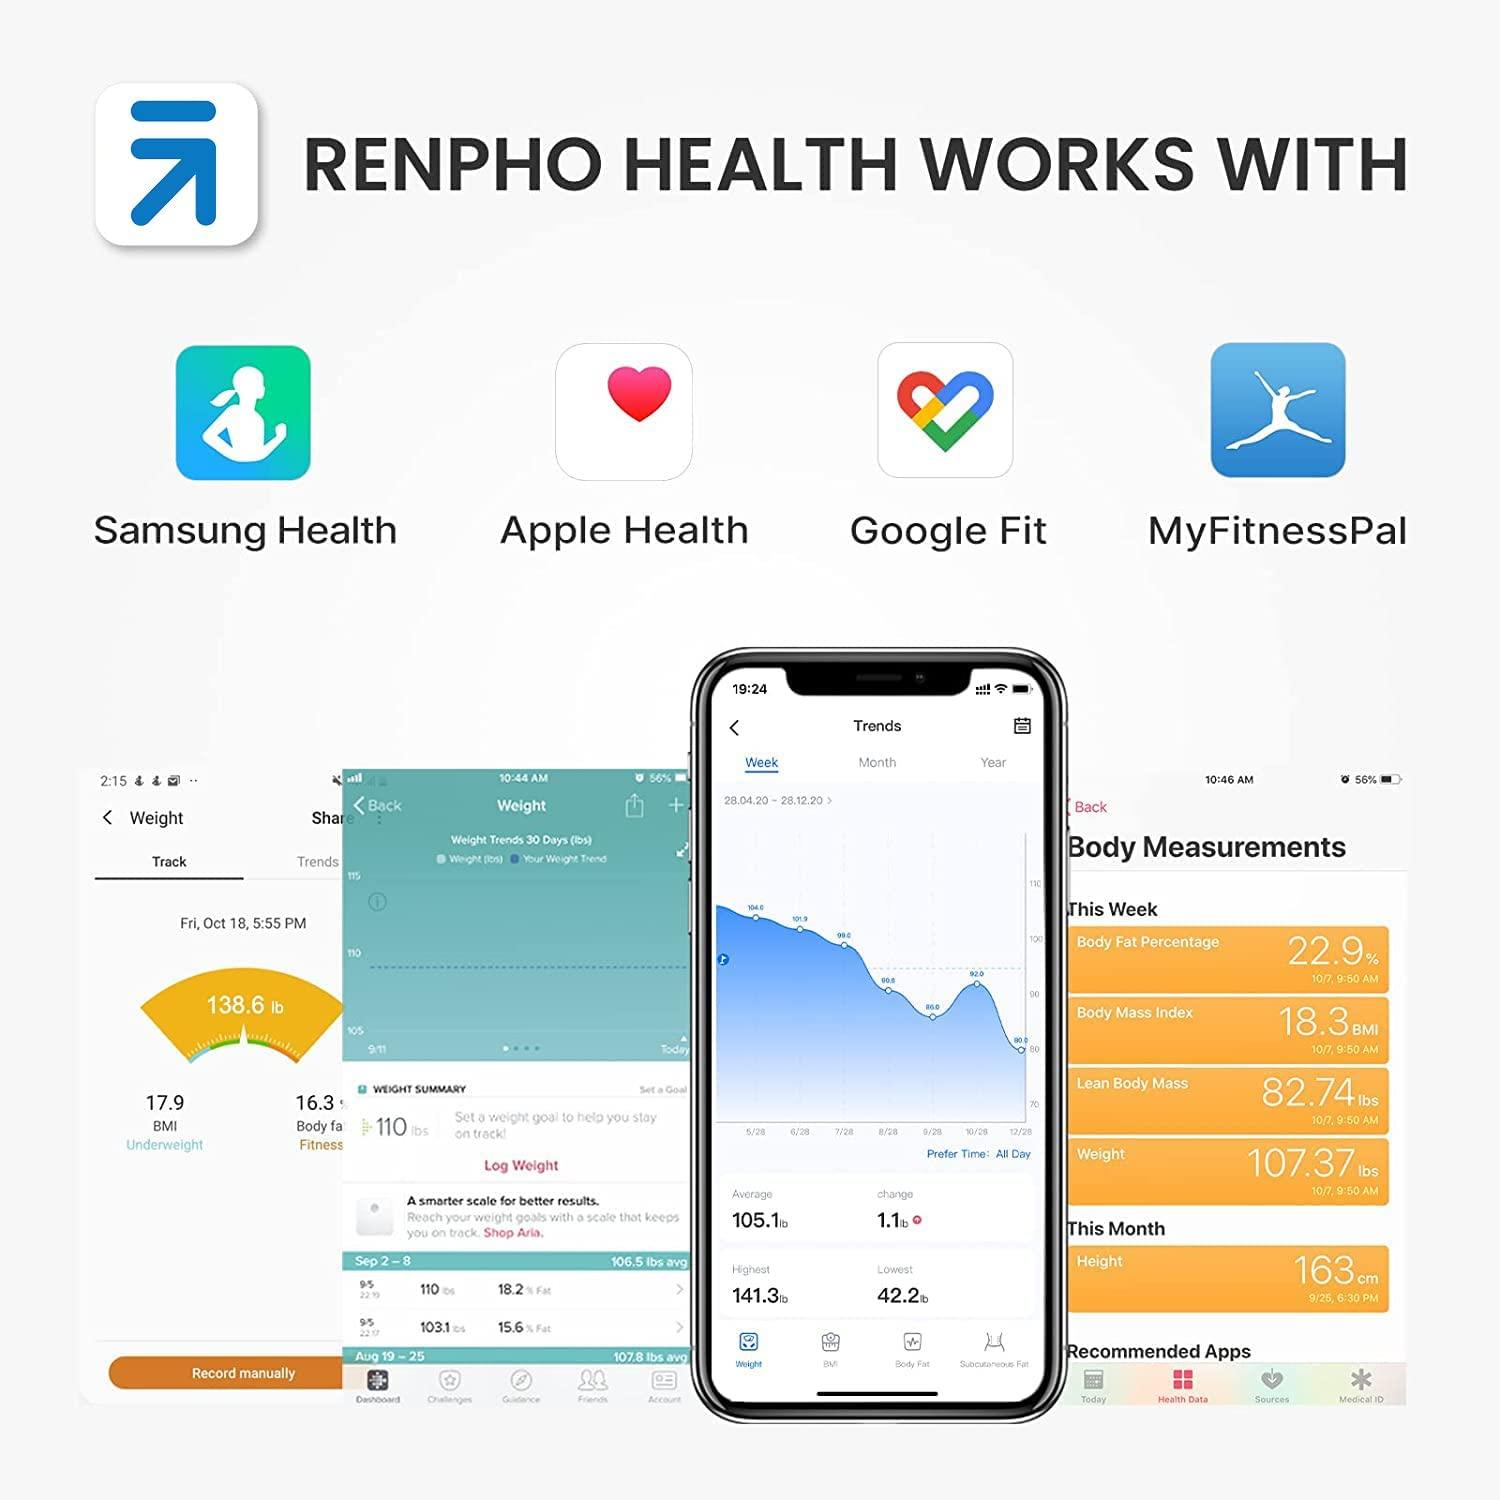 RENPHO Body Fat Scale and RENPHO Smart Tape Measure Body via Bluetooth  Smartphone App